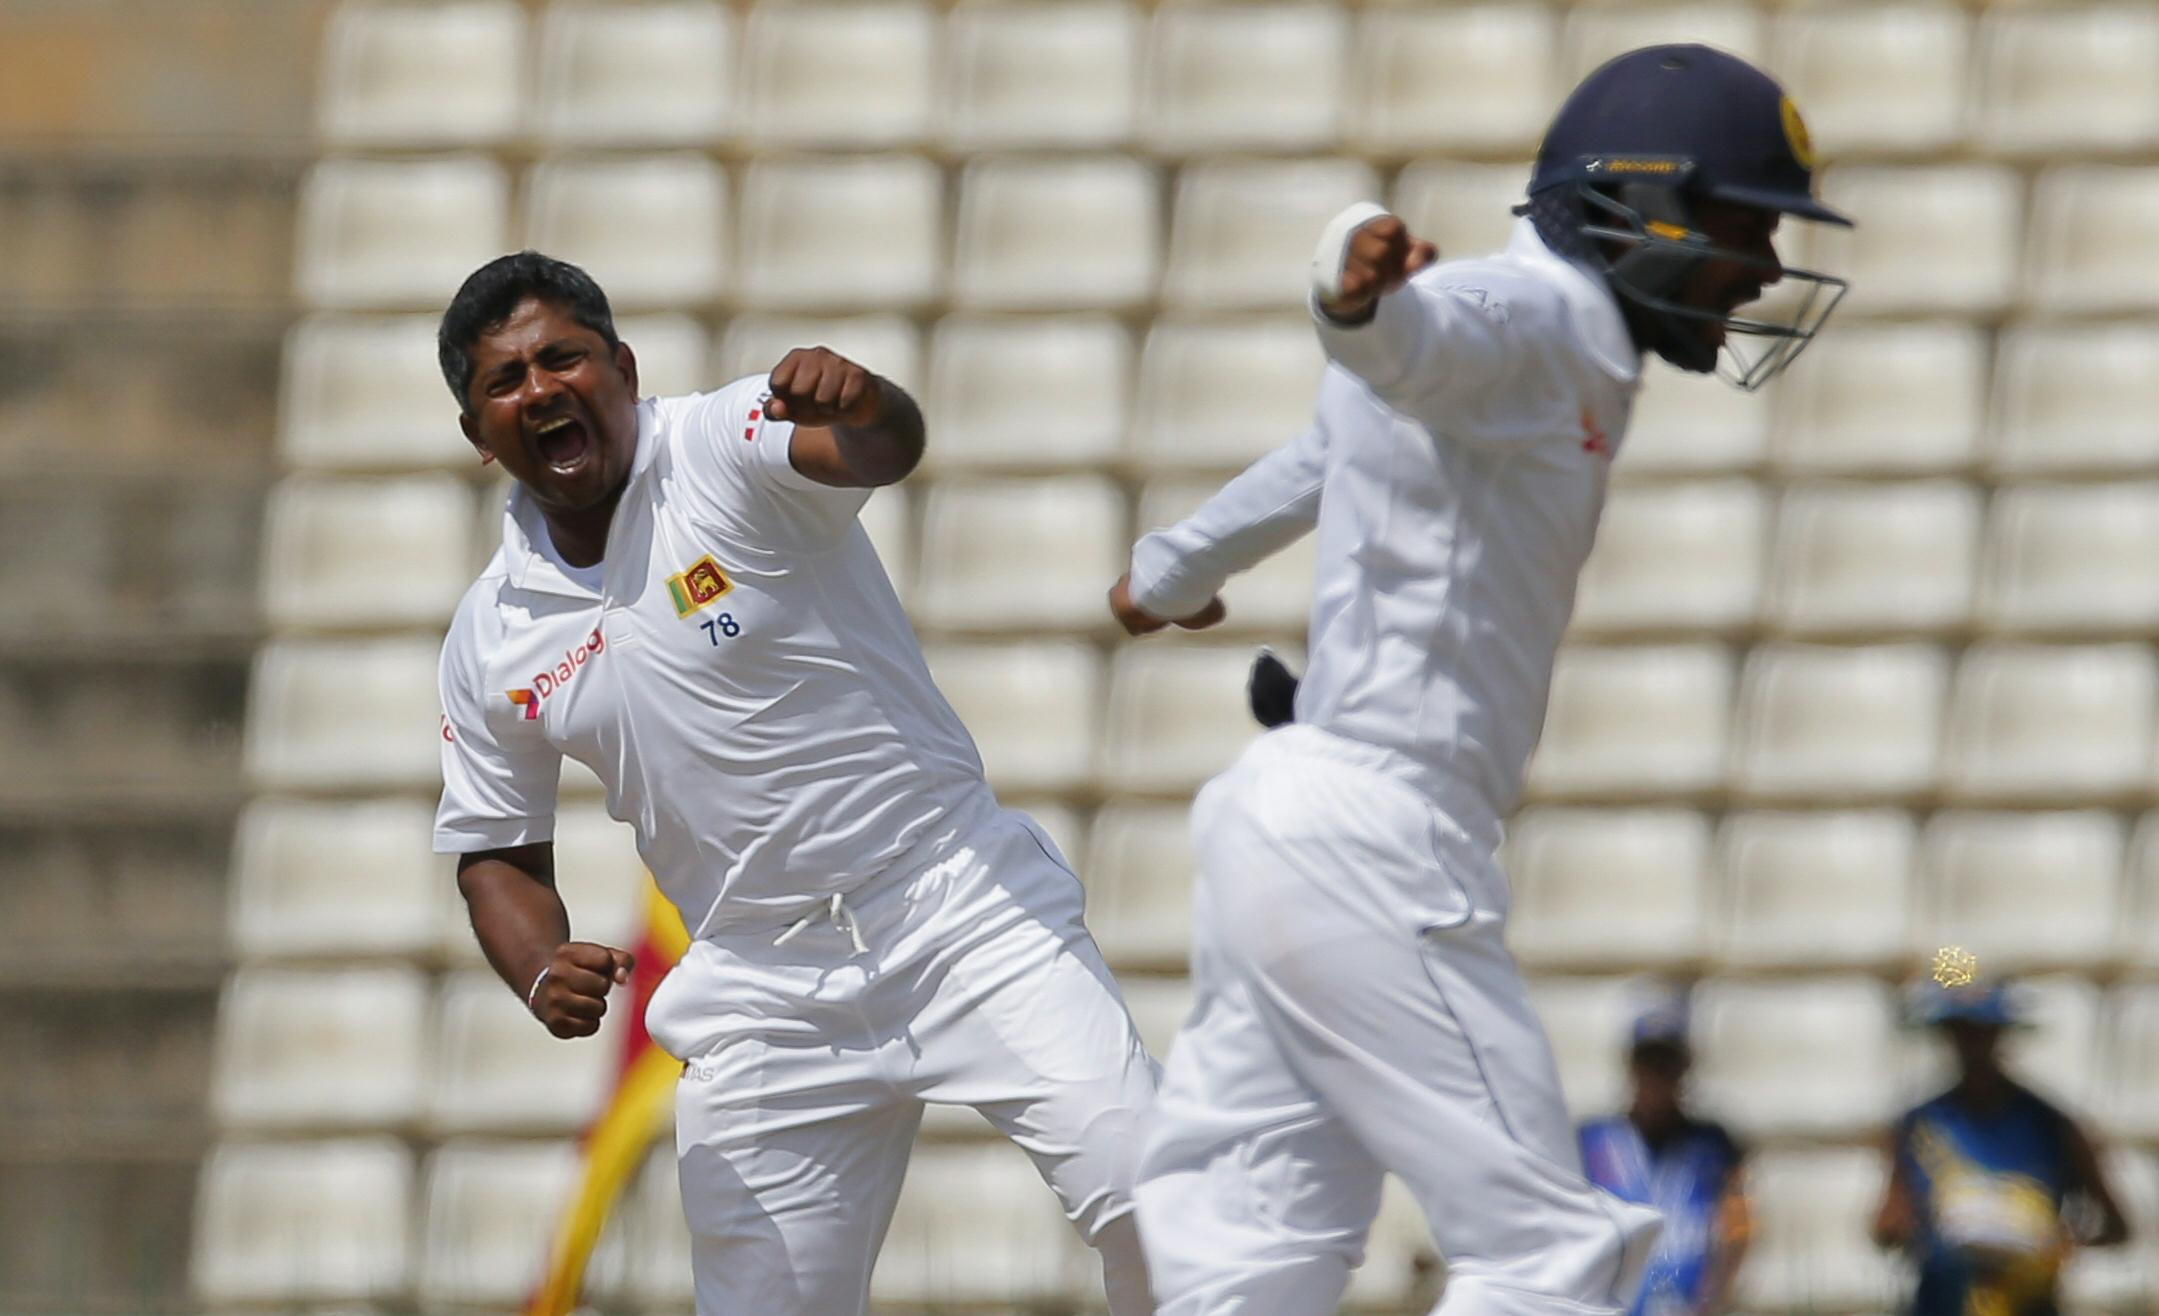 Sri Lanka bowler Rangana Herath (left) celebrates the dismissal of Australia's batsman Usman Khawaja during the second day of the first test cricket match between Sri Lanka and Australia in Pallekele, Sri Lanka, Wednesday, July 27, 2016. (AP)